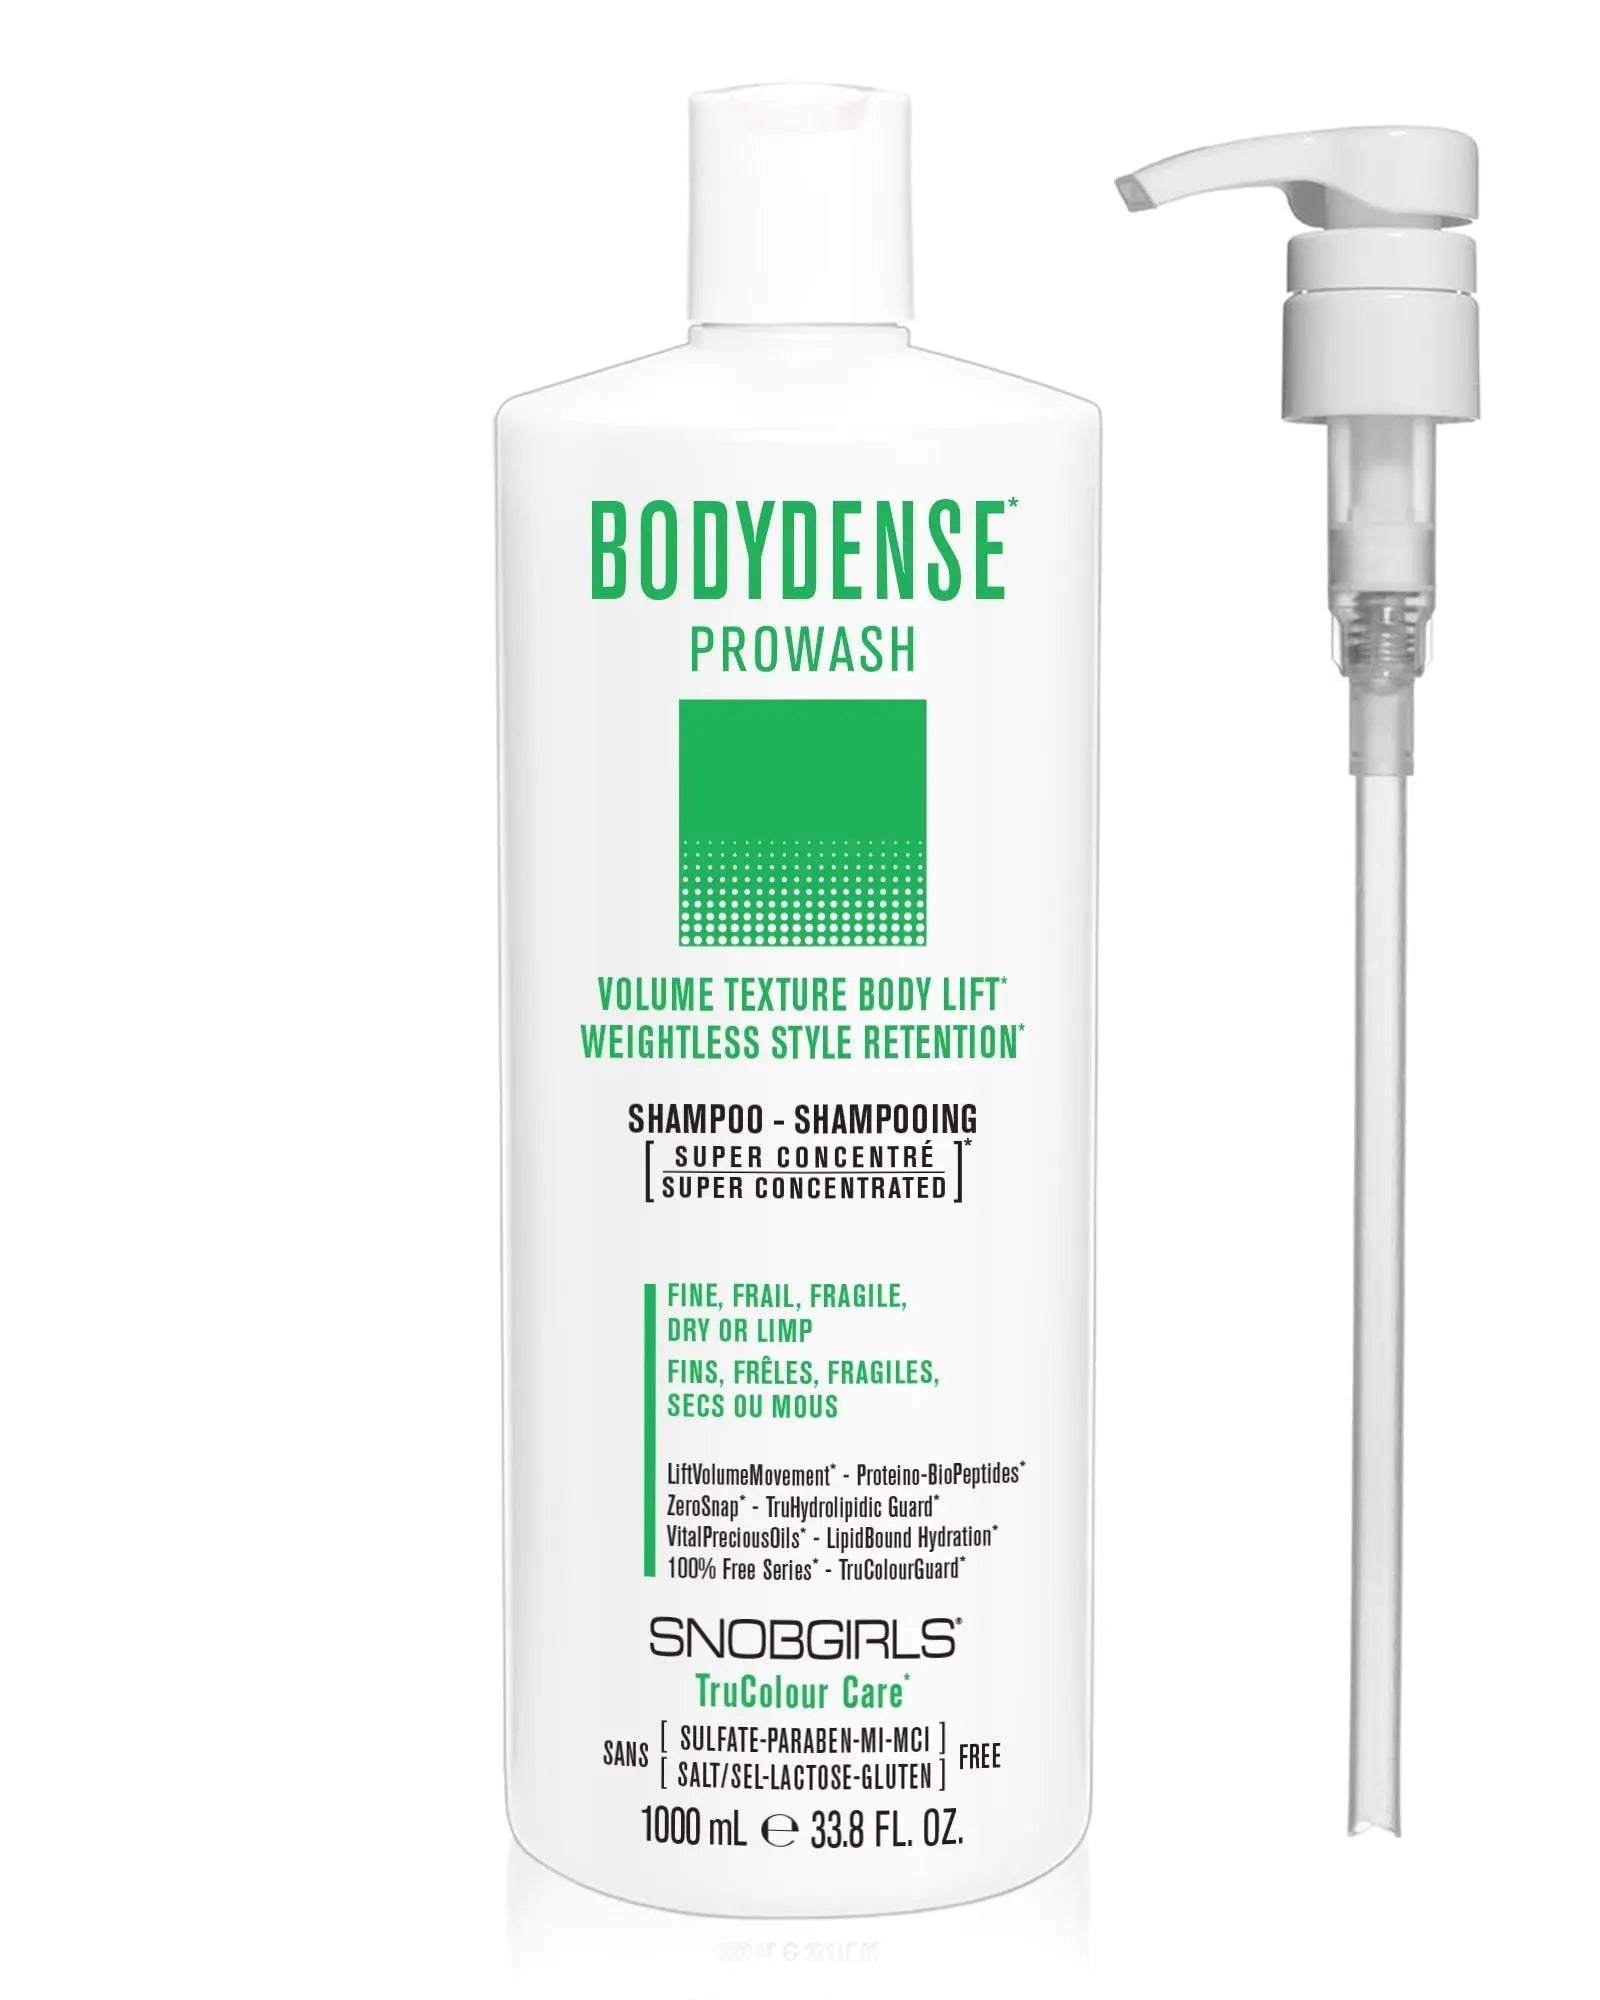 BODYDENSE Prowash (shampoo) 1000 mL + Pump - SNOBGIRLS Canada